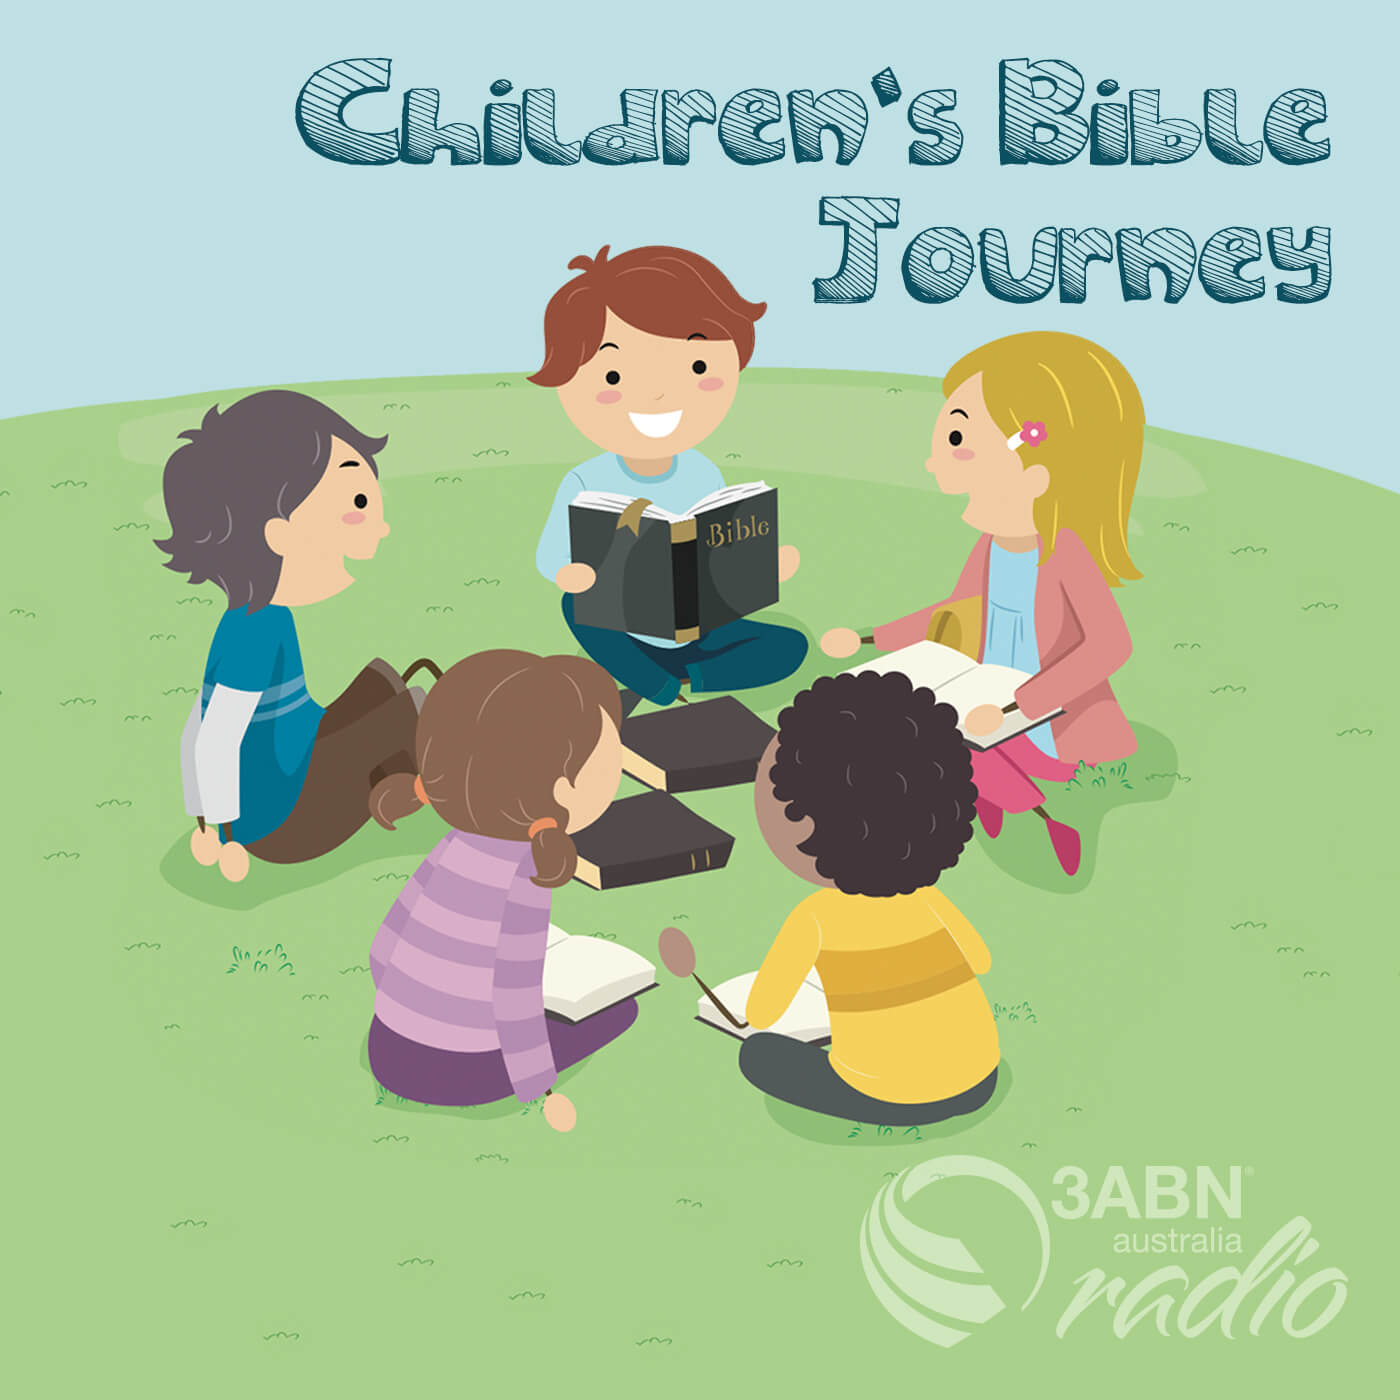 Children's Bible Journey - 2176